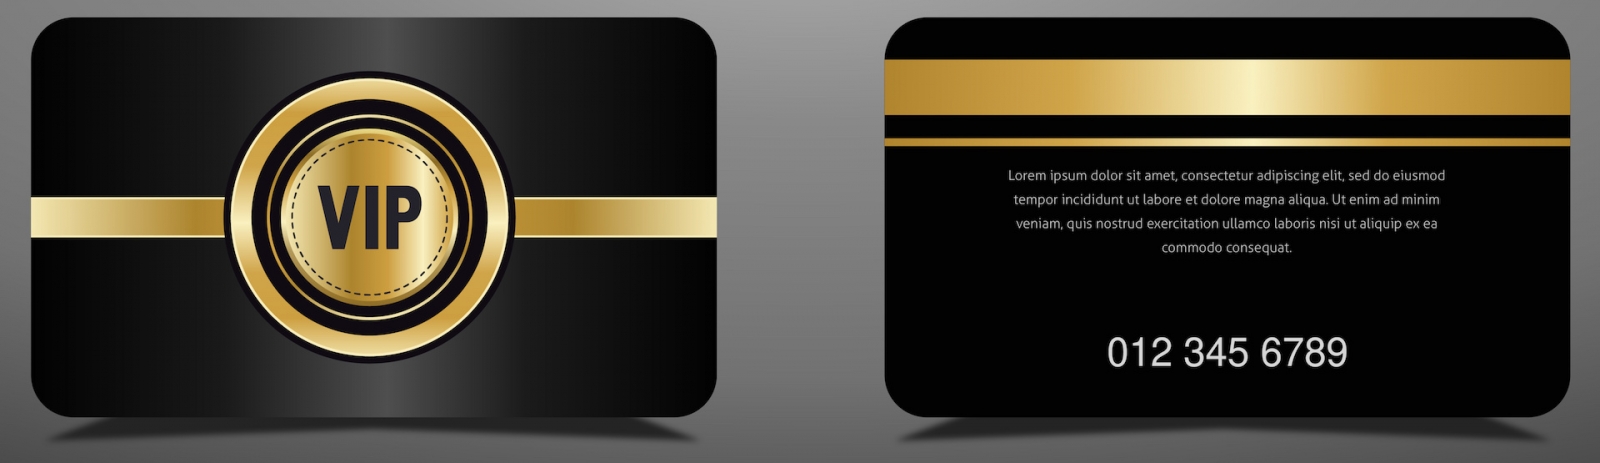 tarjeta vip dorada de lujo y elegante fondo negro, diseño de lujo para miembros vip.